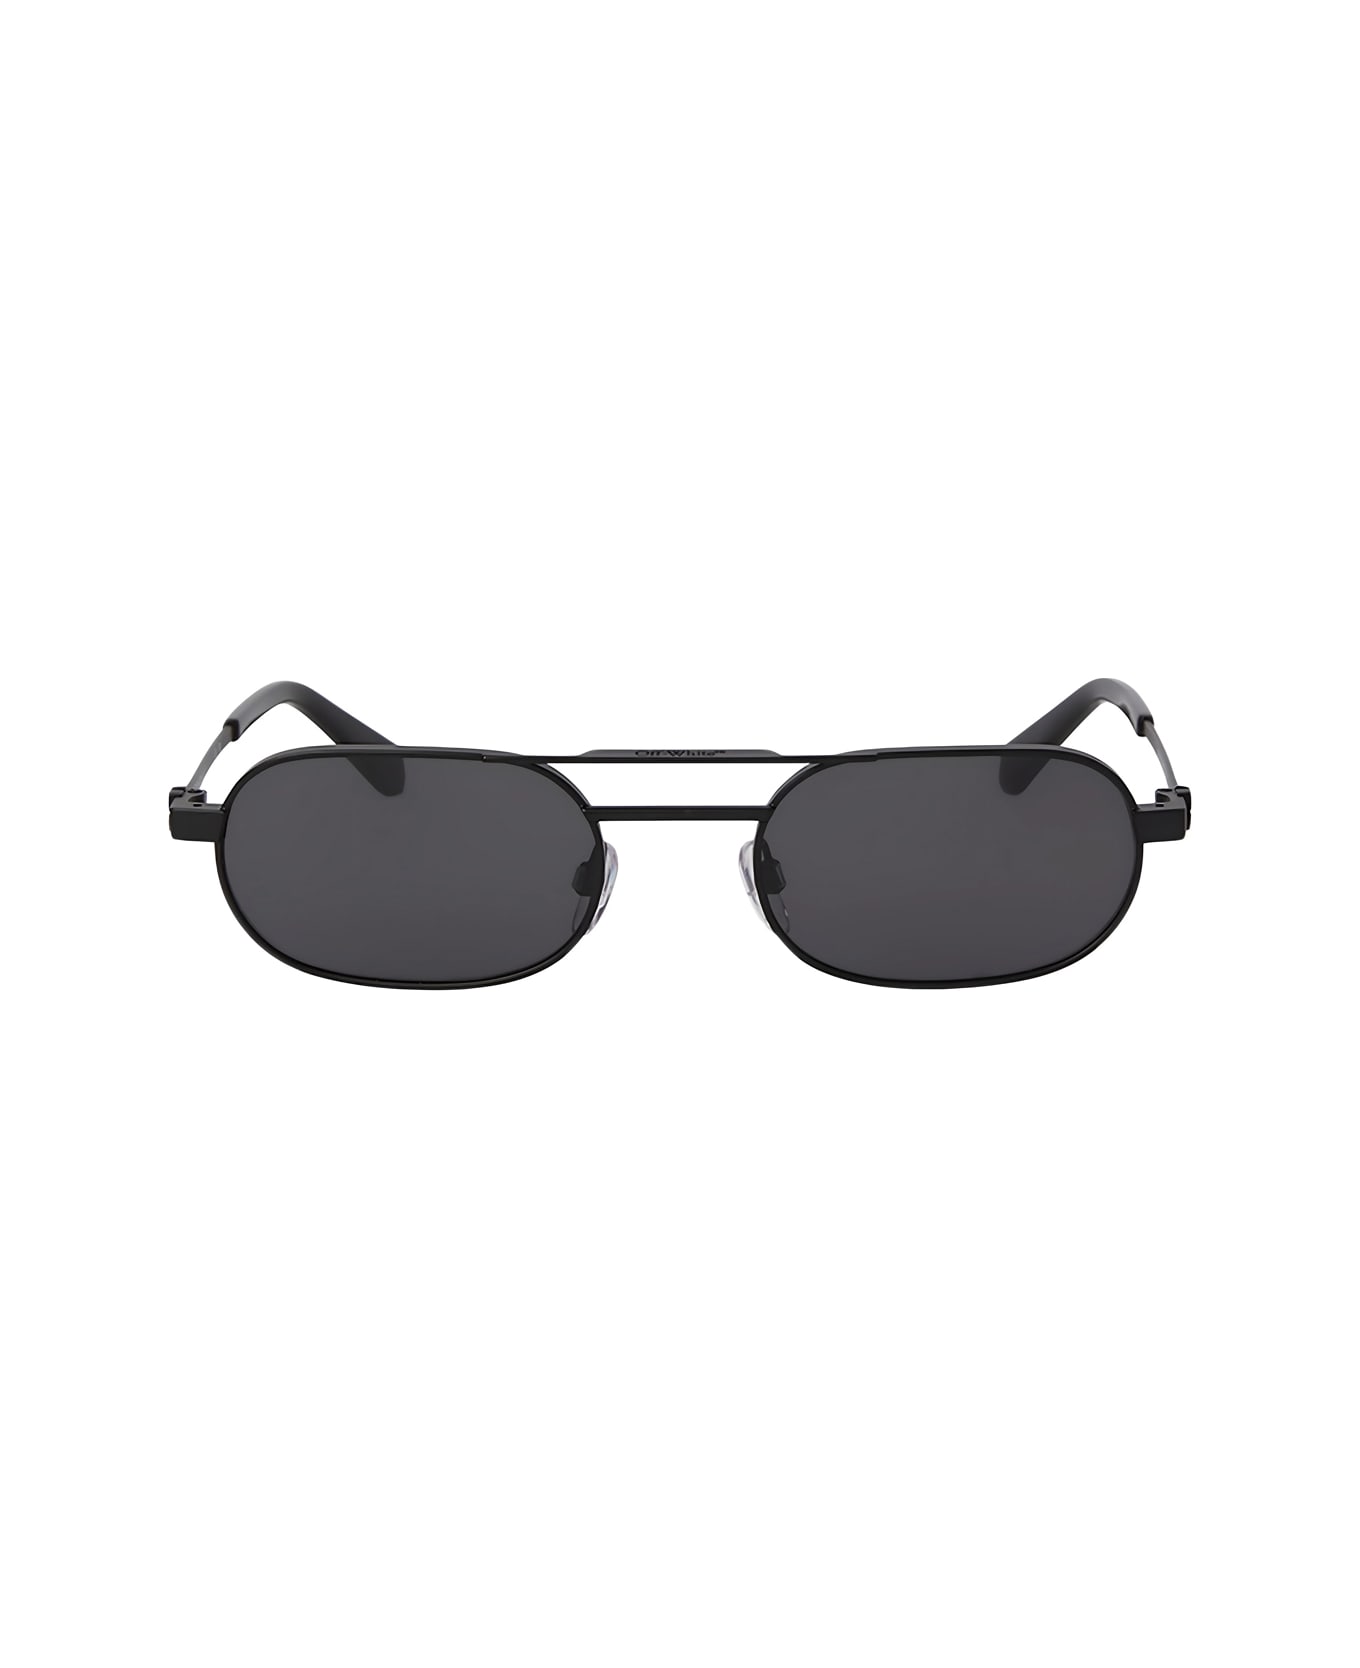 Off-White Oeri123 Vaiden 1007 Black Dark Grey Sunglasses - Nero